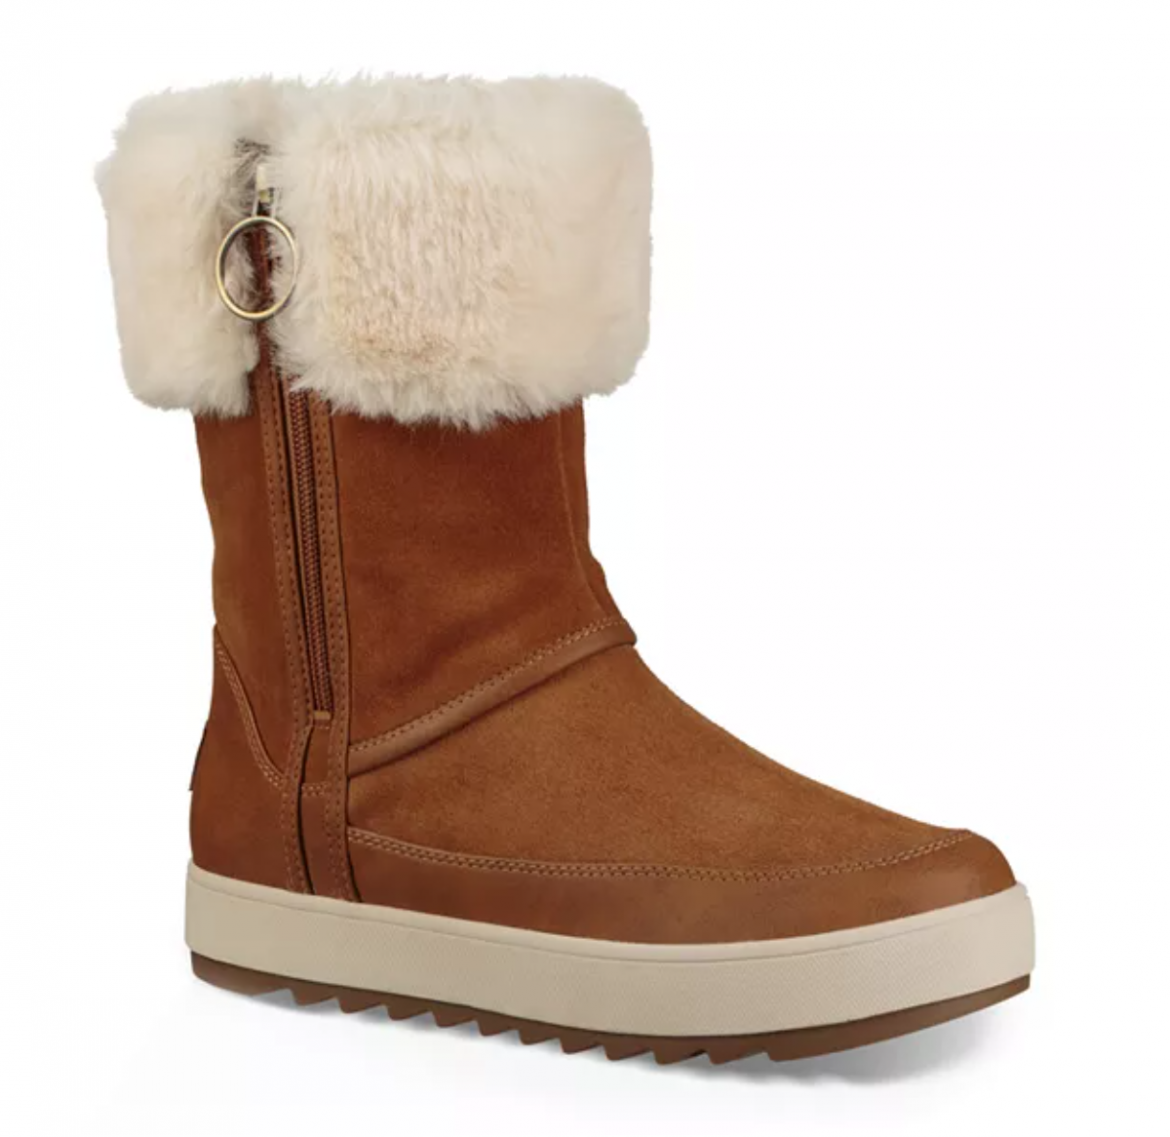 Kohl's: Women's Koolaburra by UGG Tynlee Winter Boots - $43.99 - SaveSpark